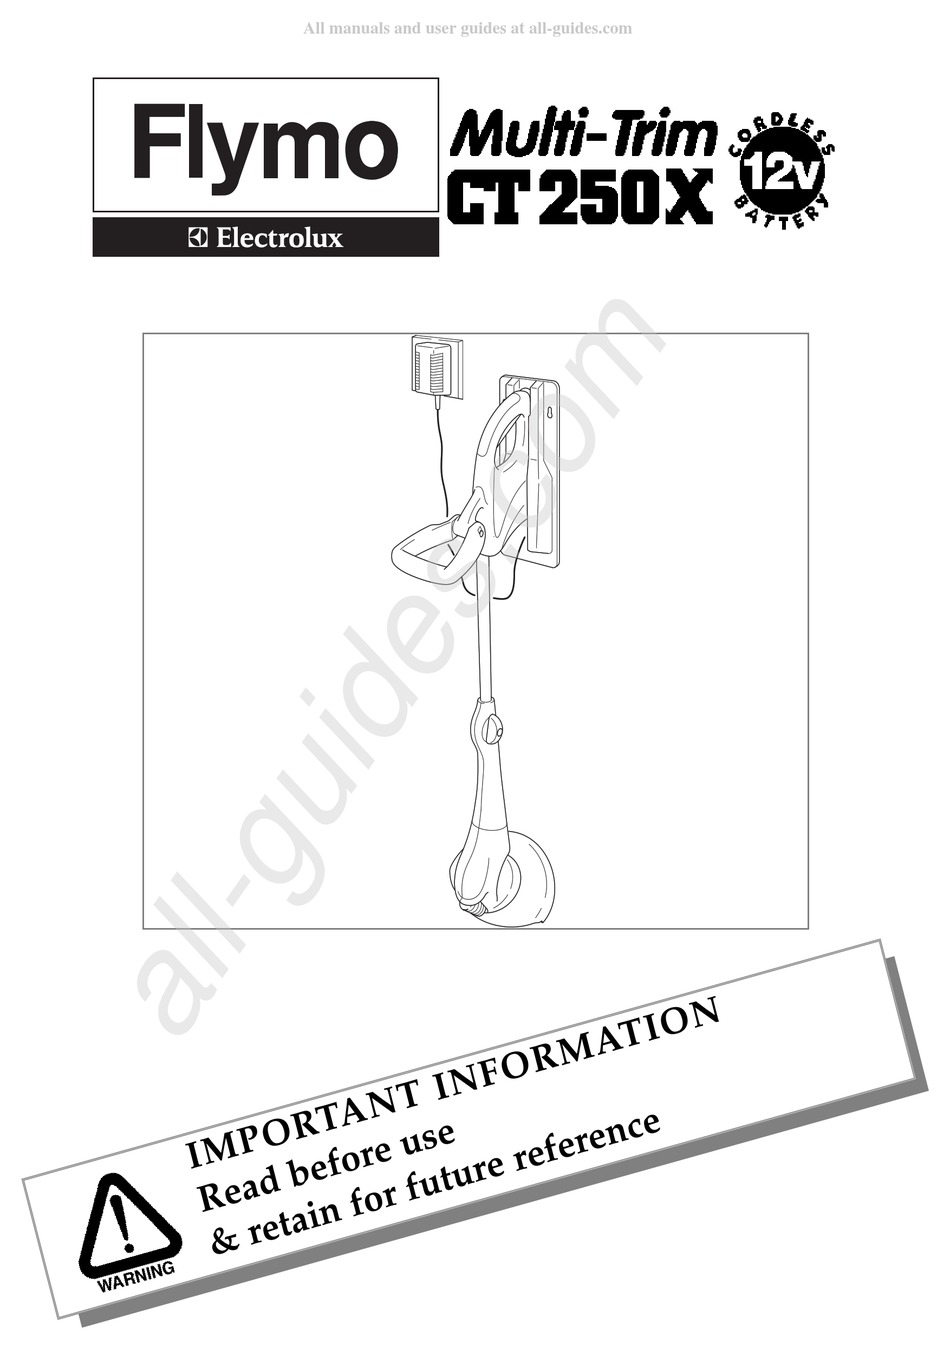 ELECTROLUX FLYMO MULTI-TRIM CT250X Pdf Download | ManualsLib